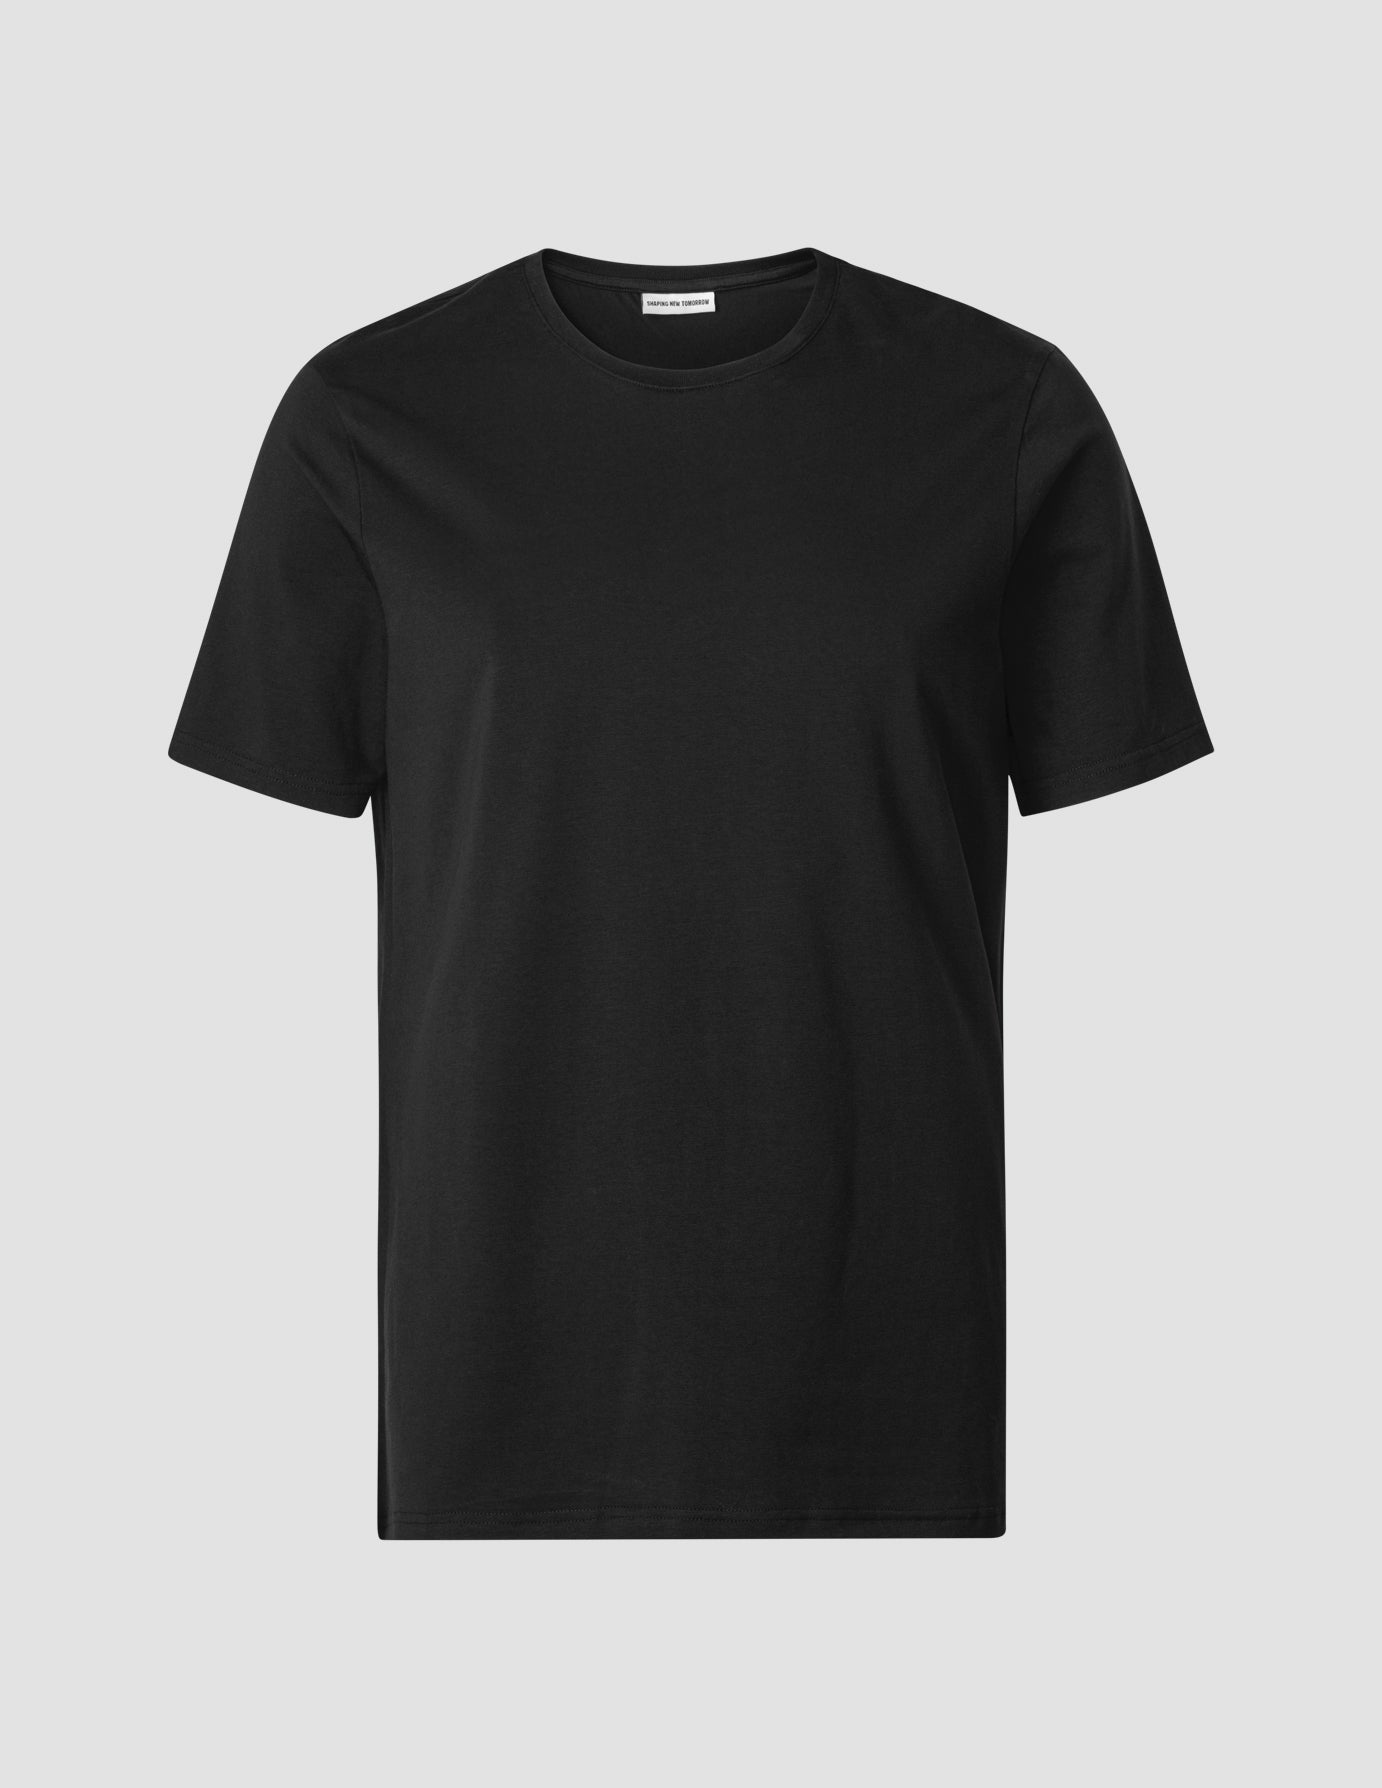 Supima T-shirt Black | SHAPING NEW TOMORROW